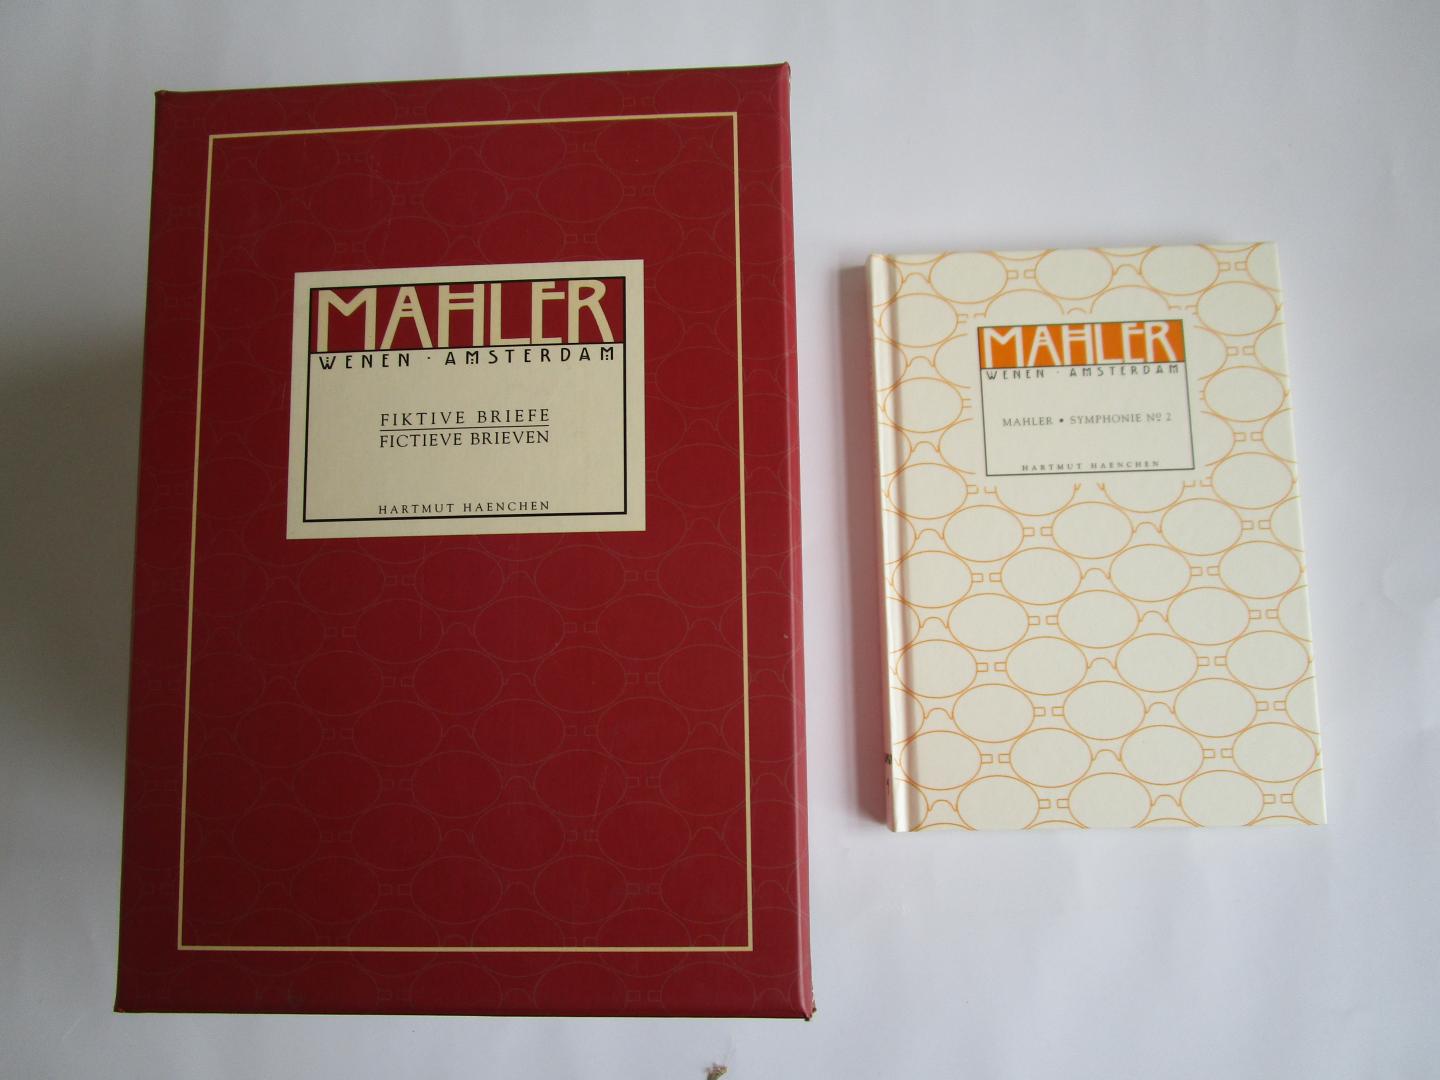 Haenchen, Hartmut - Mahler Wenen - Amsterdam   - Fiktive Briefe / Fictieve brieven  -